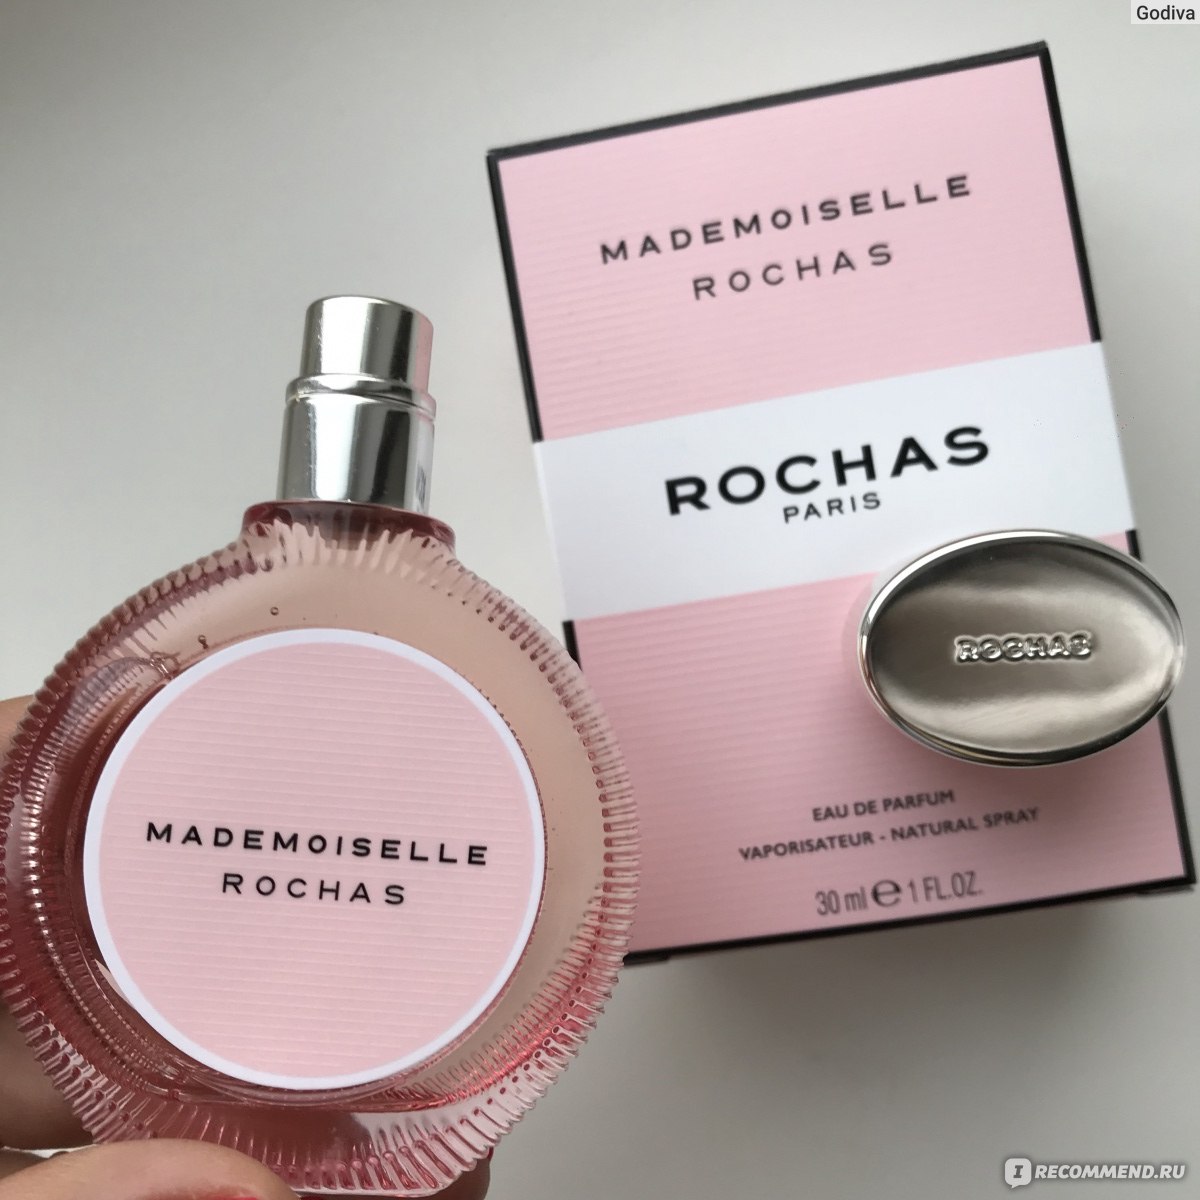 Rochas mademoiselle rochas отзывы. Духи Mademoiselle Rochas. Вода мадмуазель рошас. Mademoiselle Rochas от Rochas. Mademoiselle Rochas розовые.